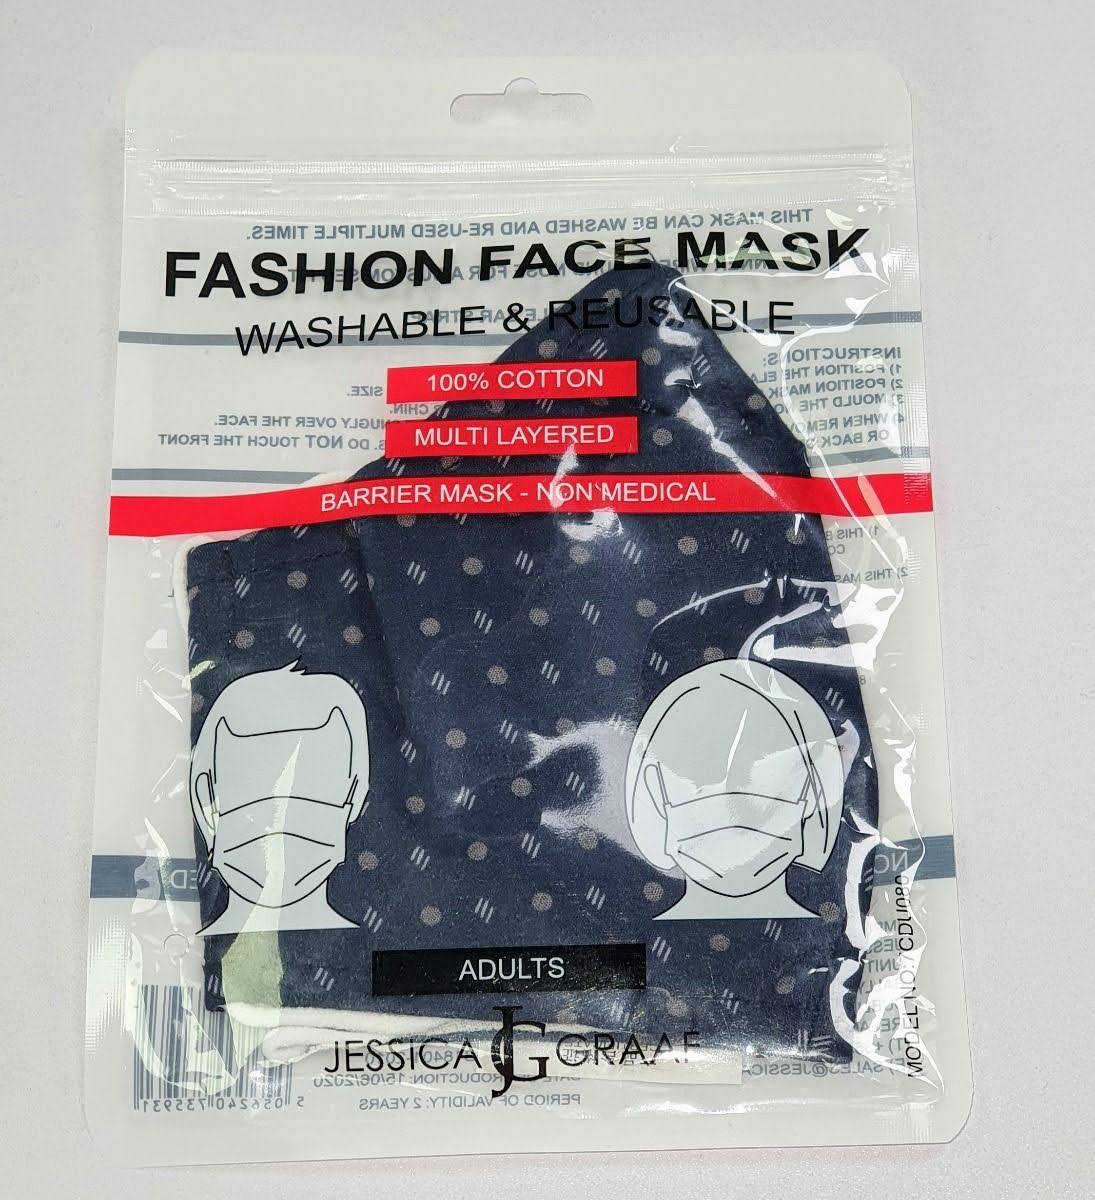 Jessica Graaf- Adult Navy Face Mask